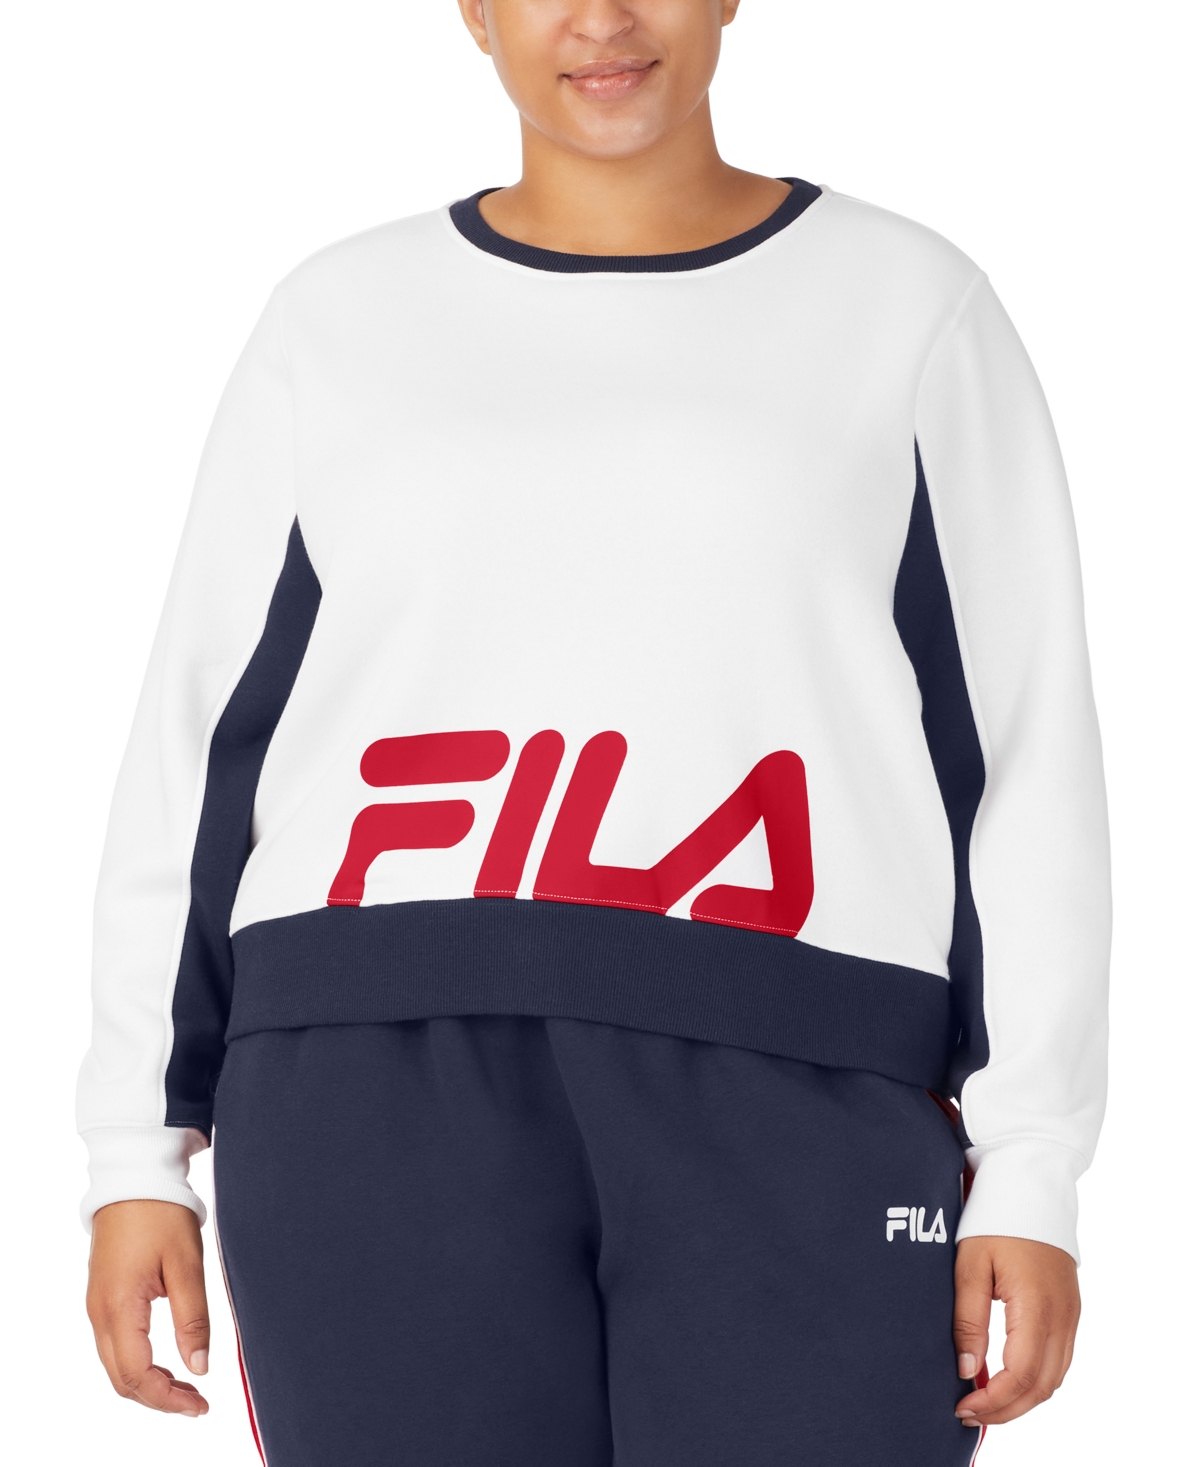 Fila Plus Size Calm Graphic Colorblocked Sweatshirt